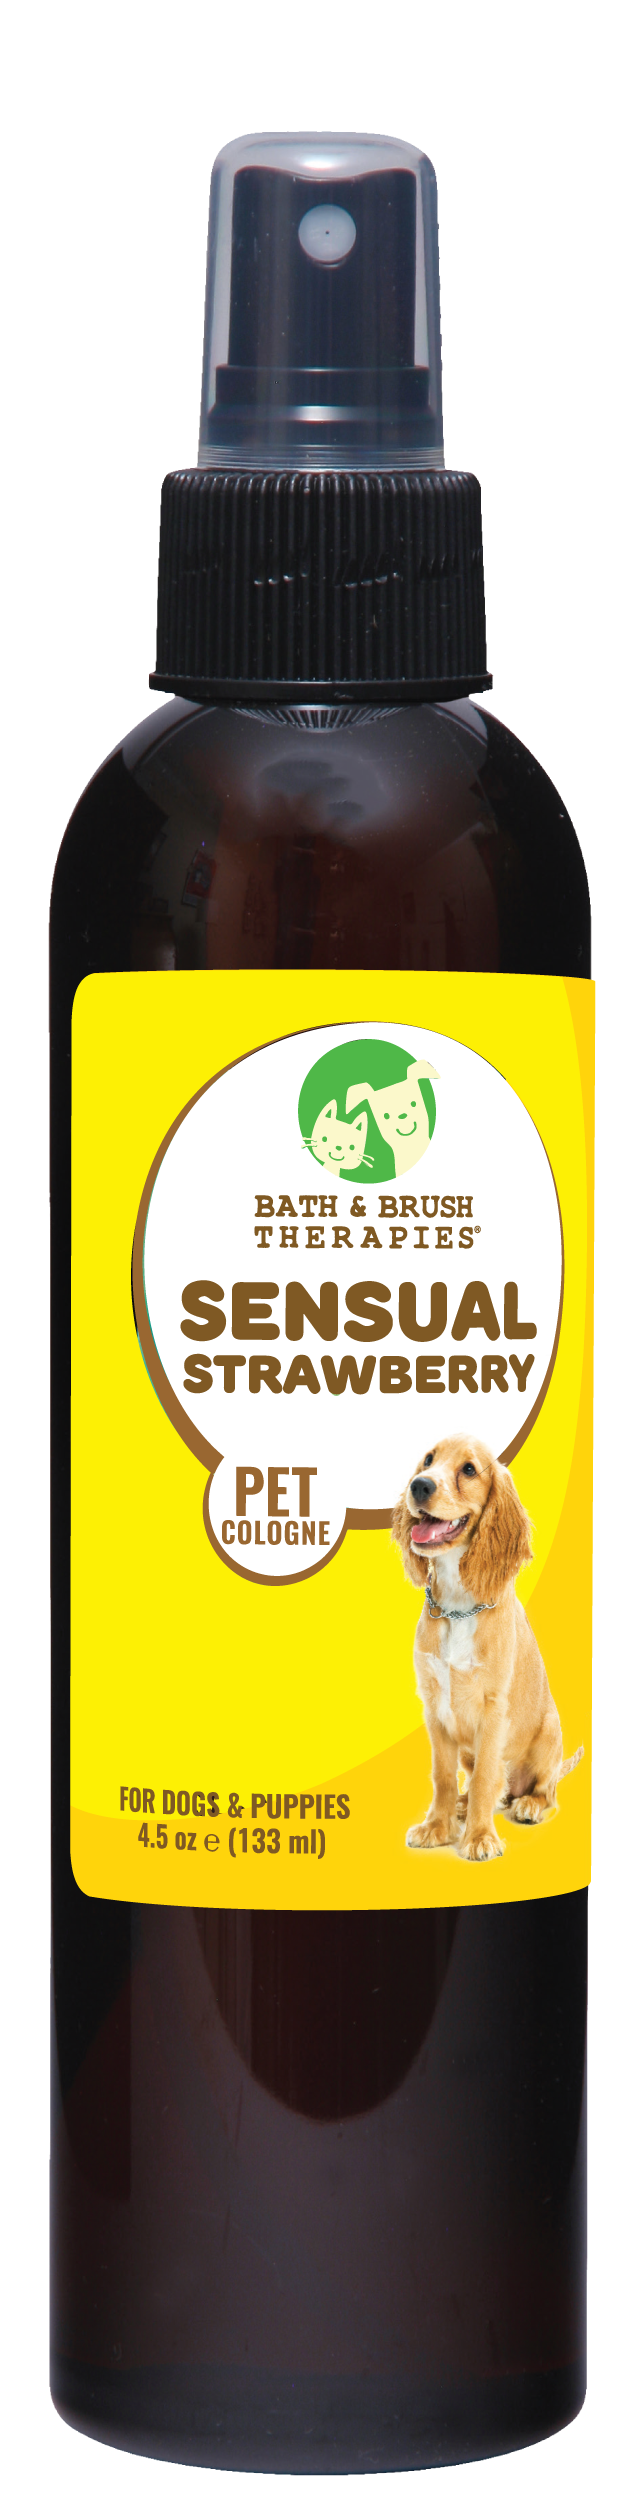 Sensual Strawberry Pet Cologne | Bath & Brush Therapies®